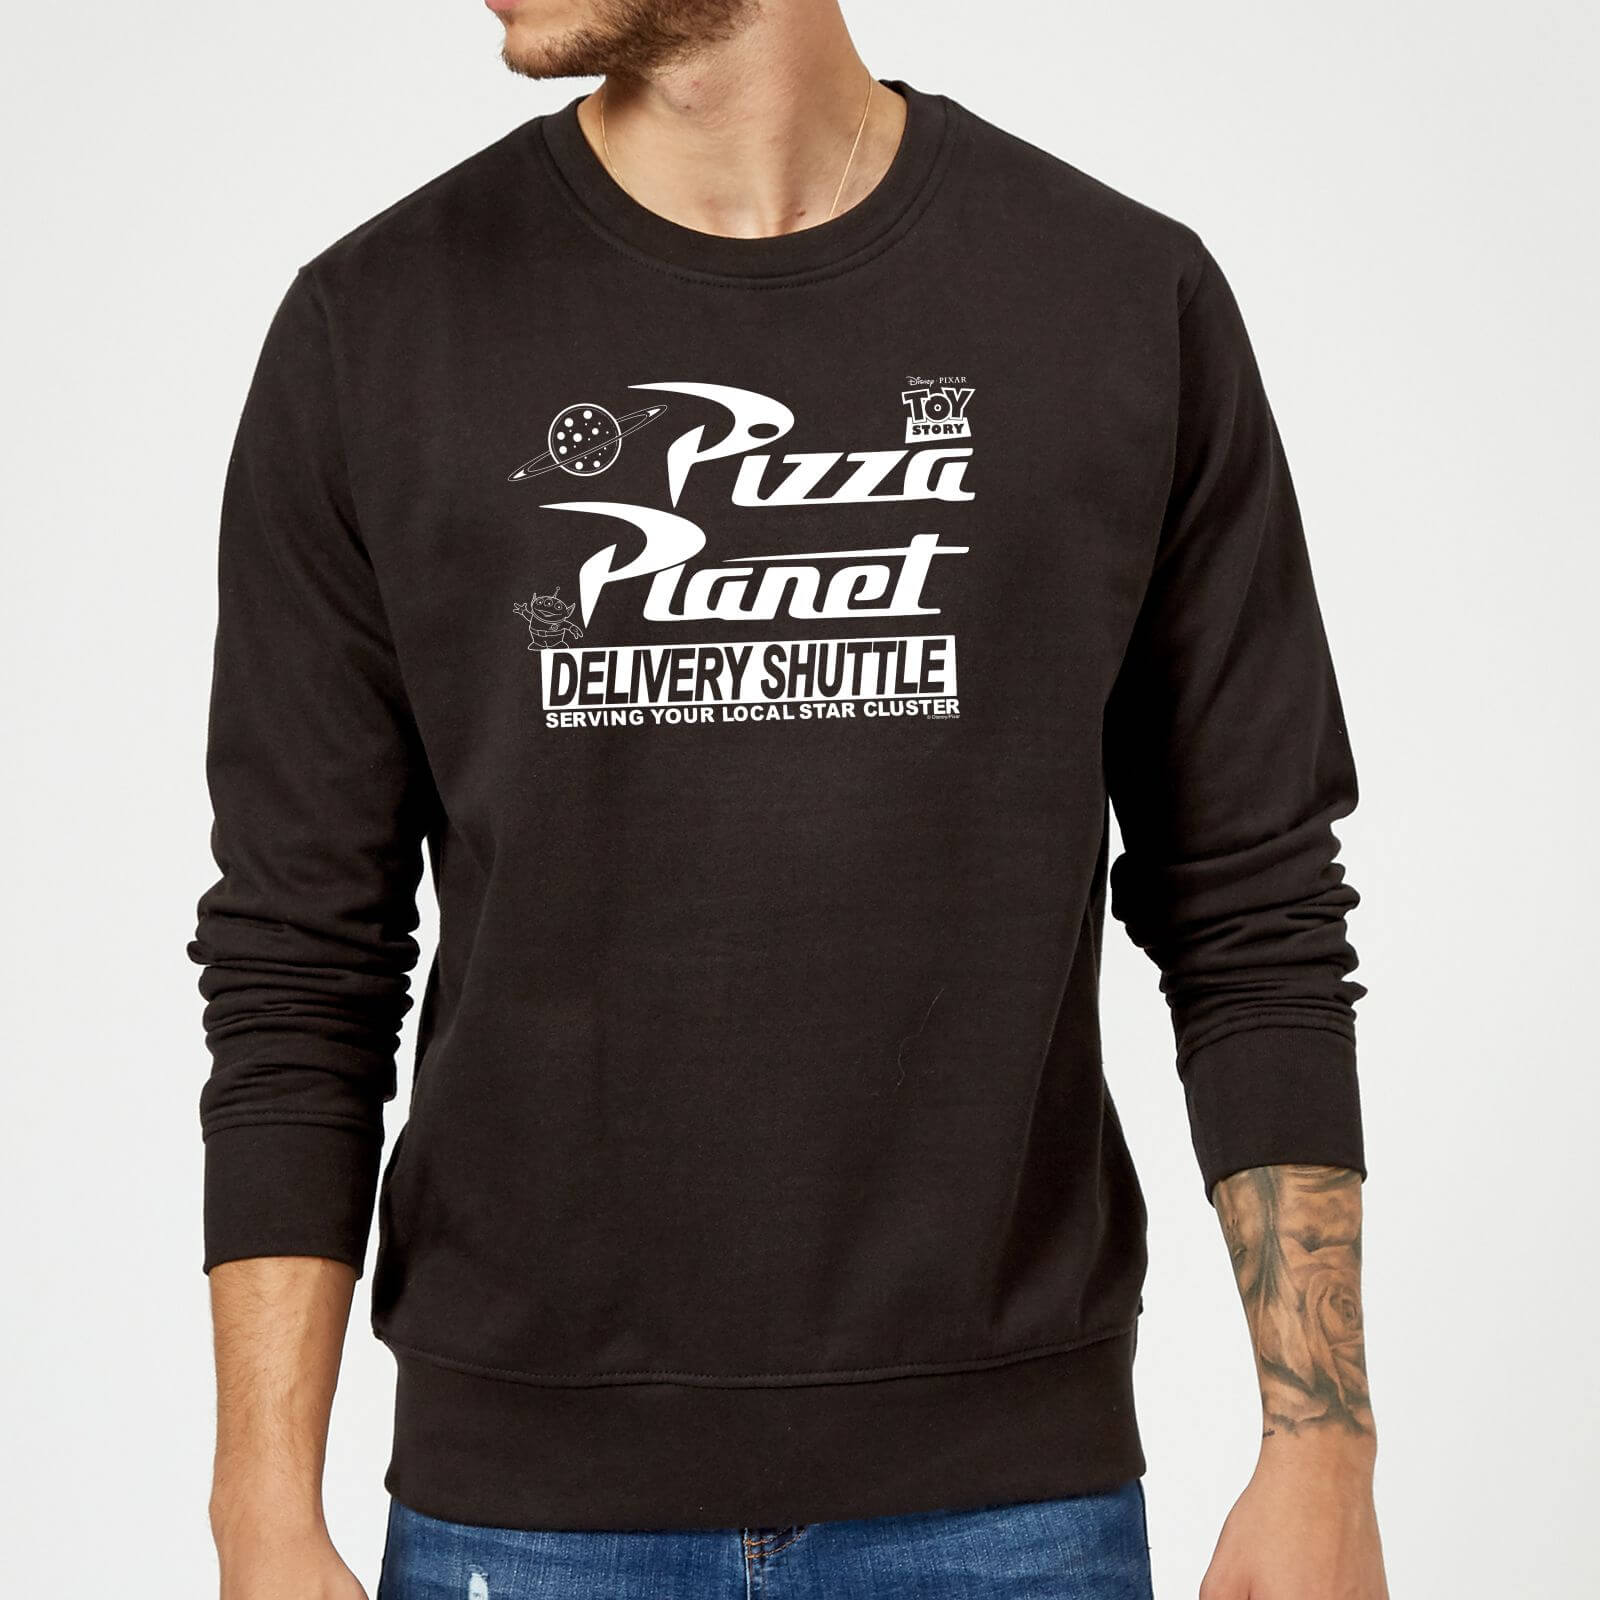 Toy Story Pizza Planet Logo Sweatshirt - Black - S